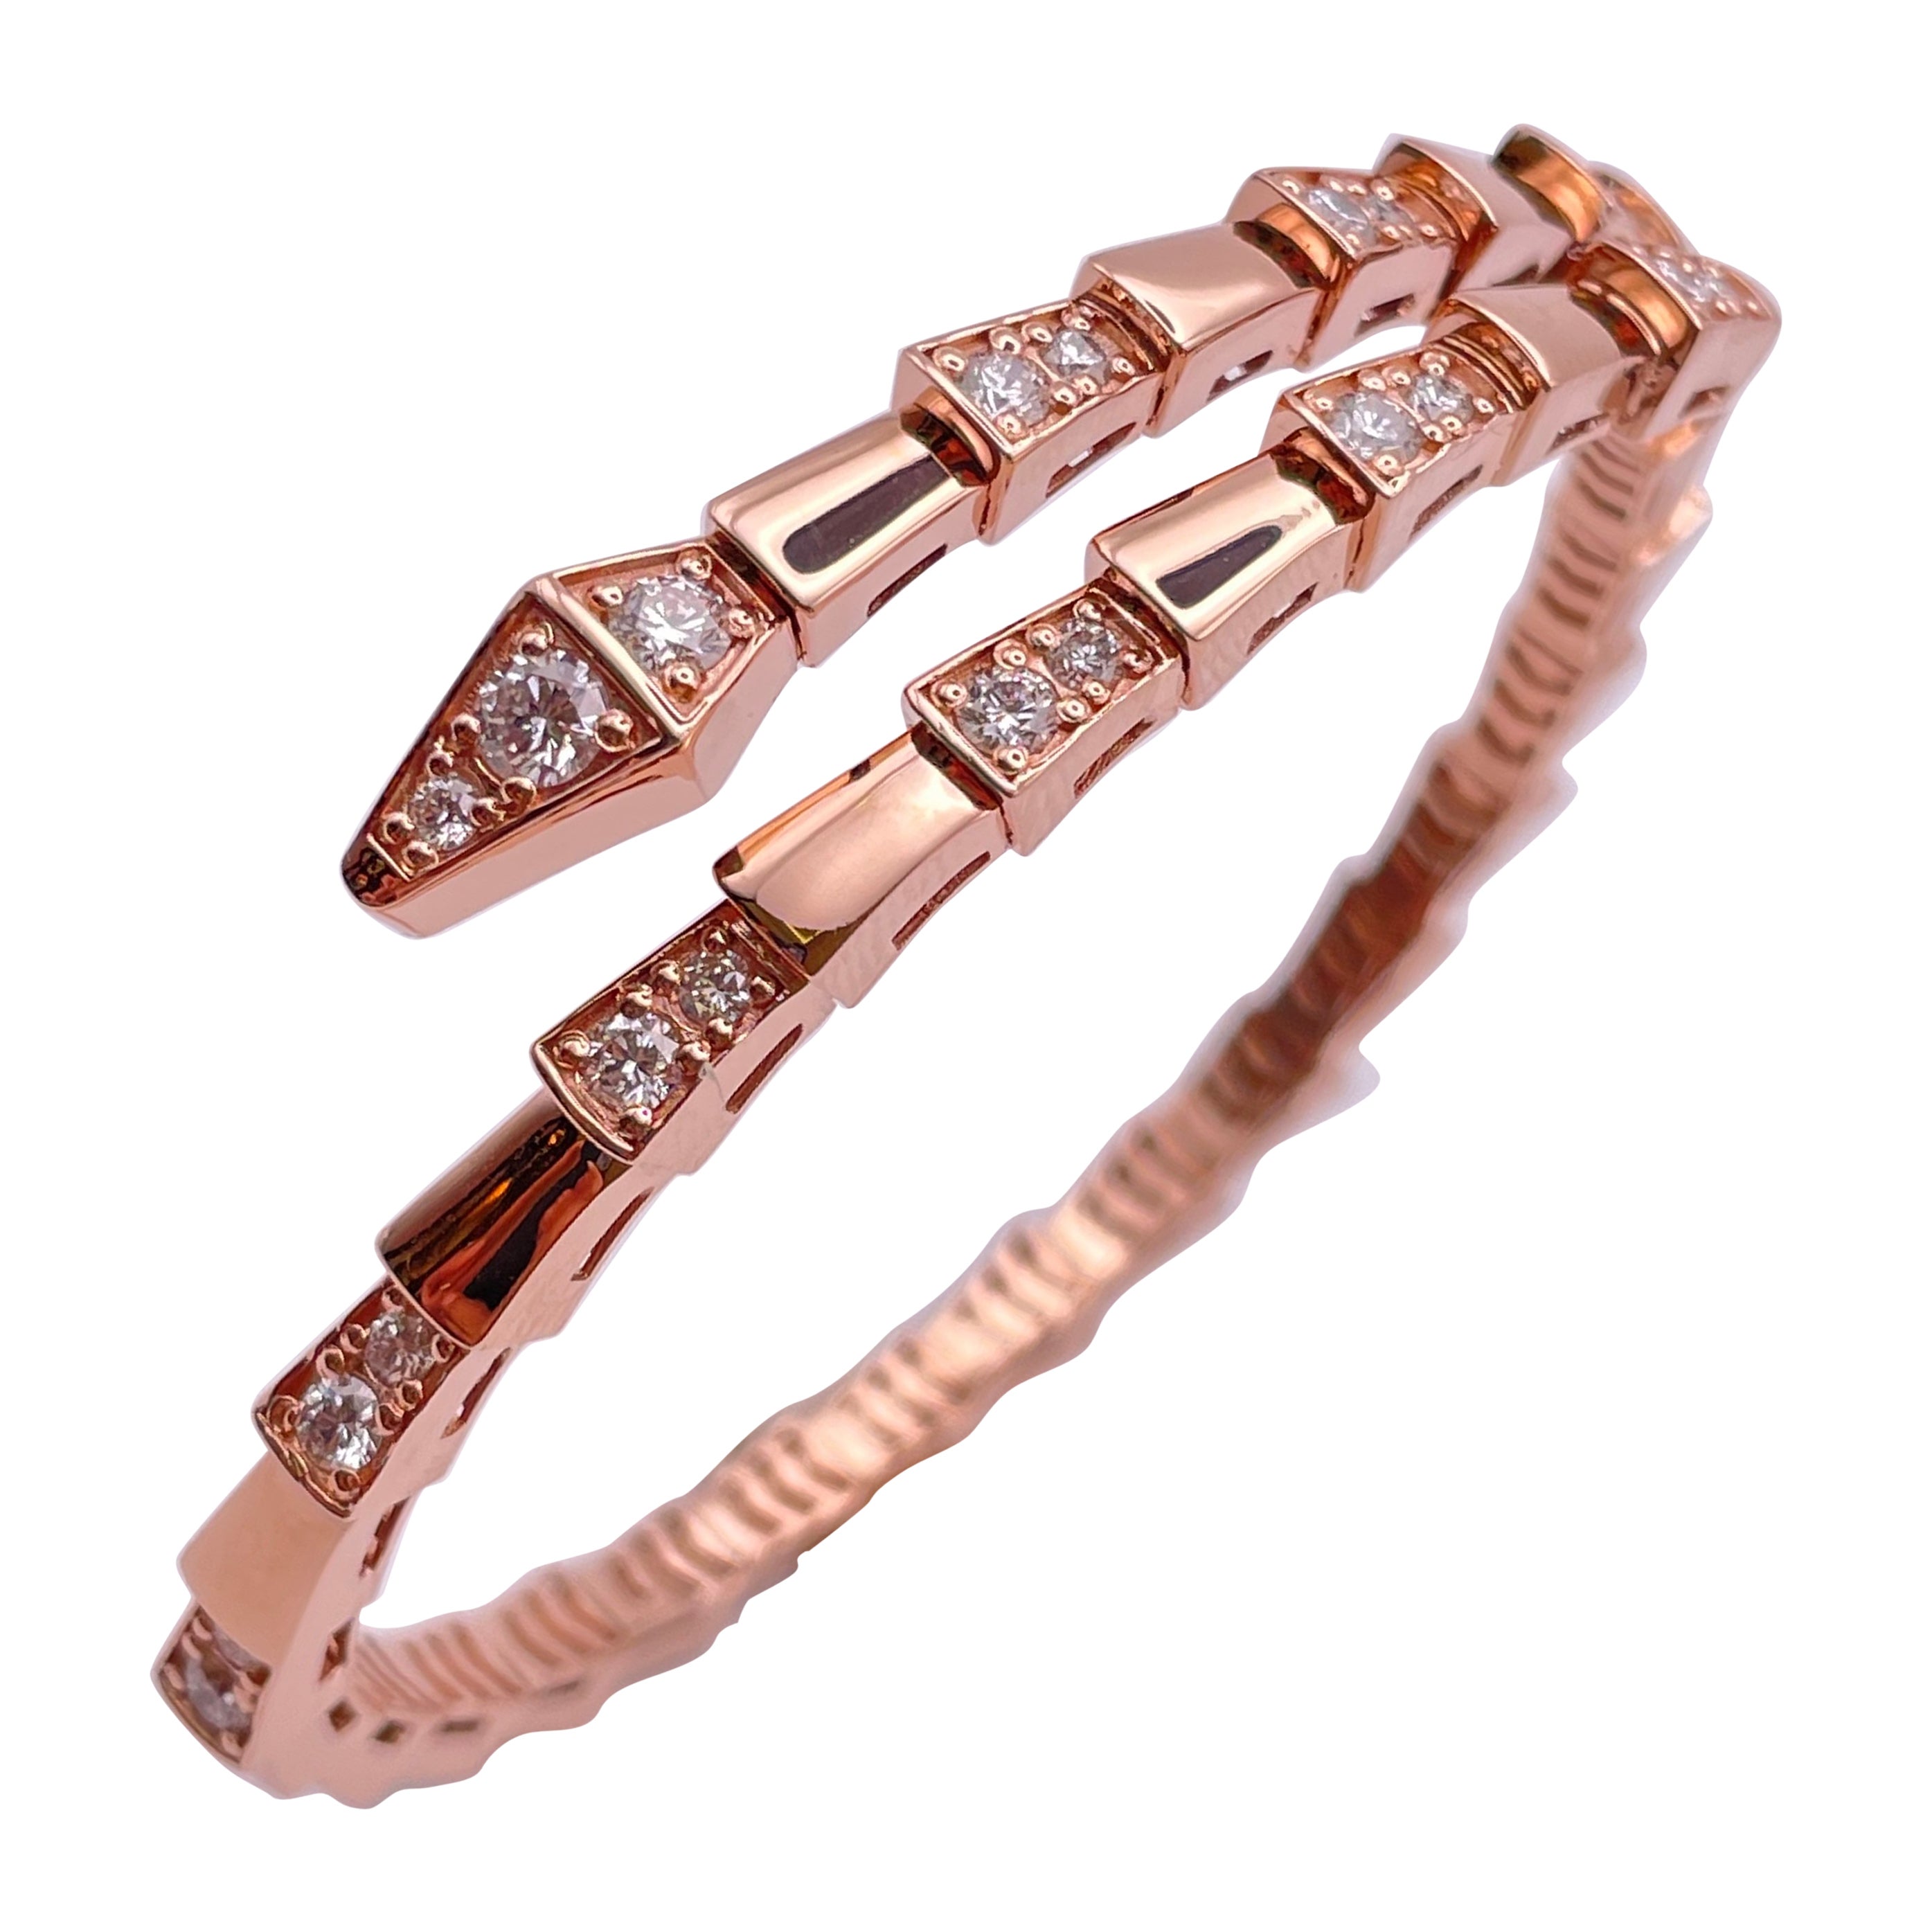 Roségold Schlangen-Viper-Armband mit 1,85 Karat Diamanten.